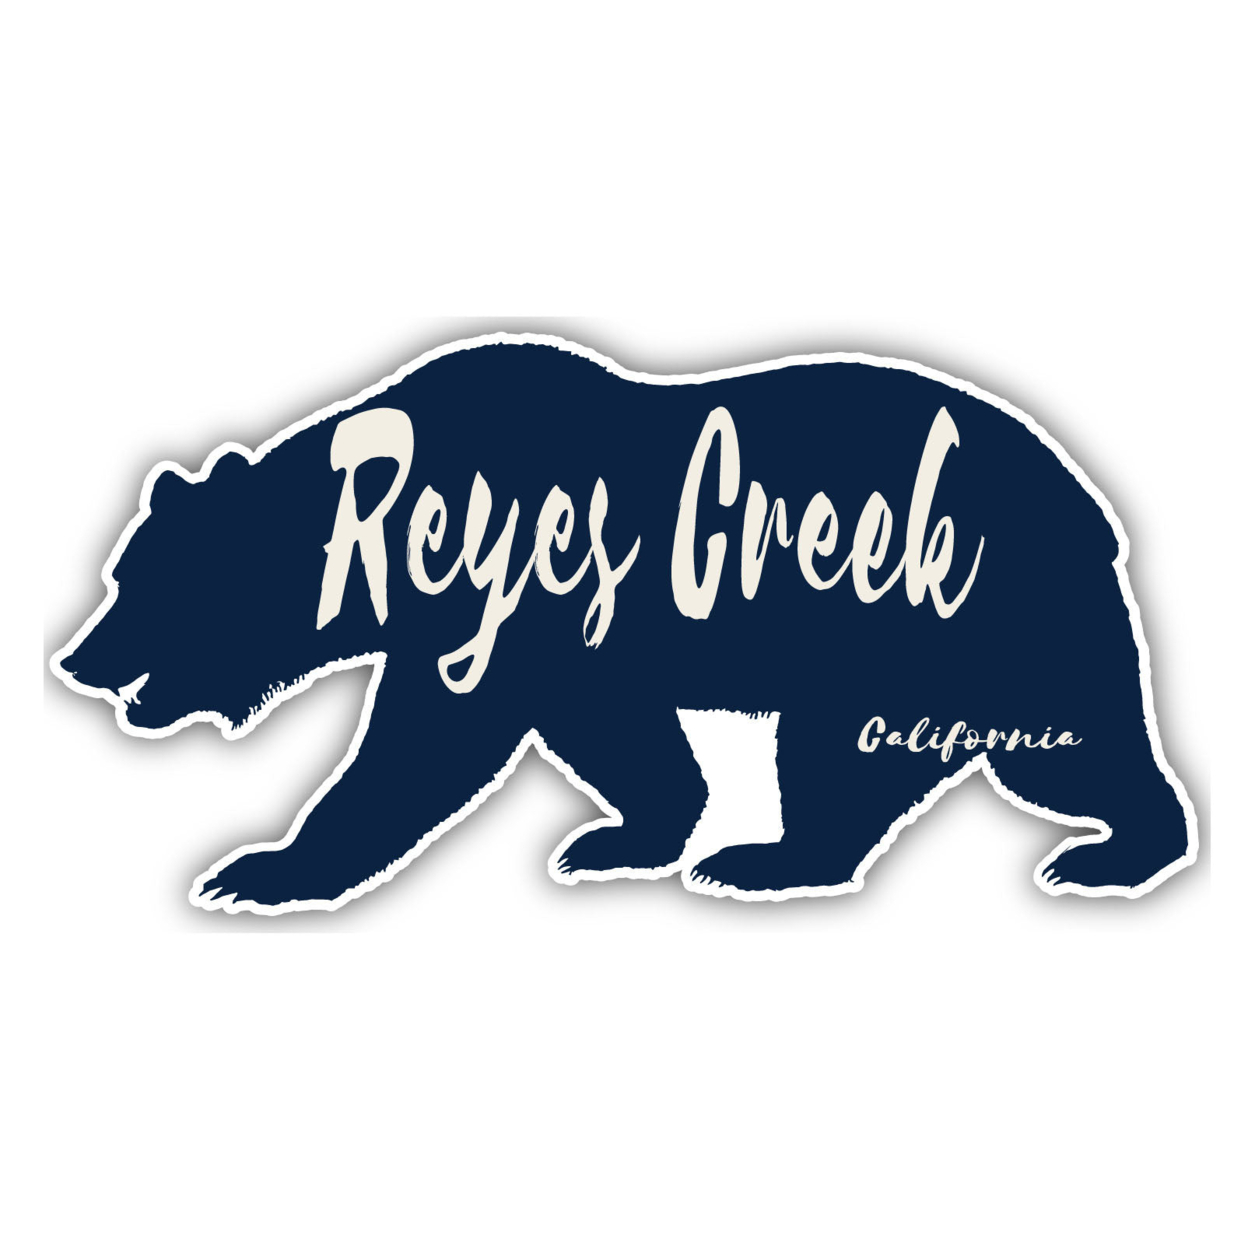 Reyes Creek California Souvenir Decorative Stickers (Choose Theme And Size) - Single Unit, 2-Inch, Bear